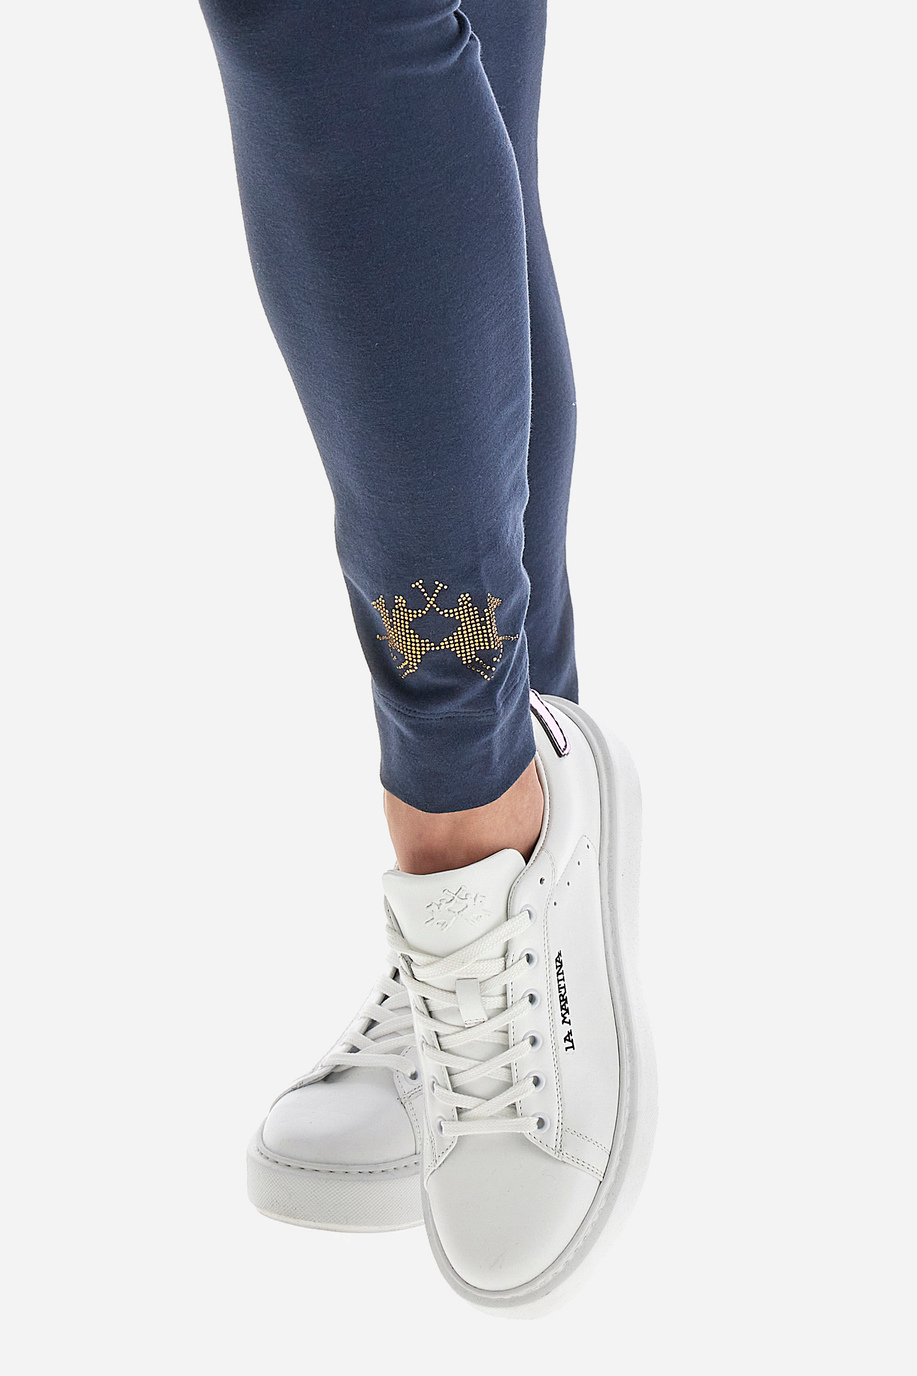 Pantalone leggings donna con logo paillettes Polo Academy tinta unita - Vijay - Pantaloni | La Martina - Official Online Shop